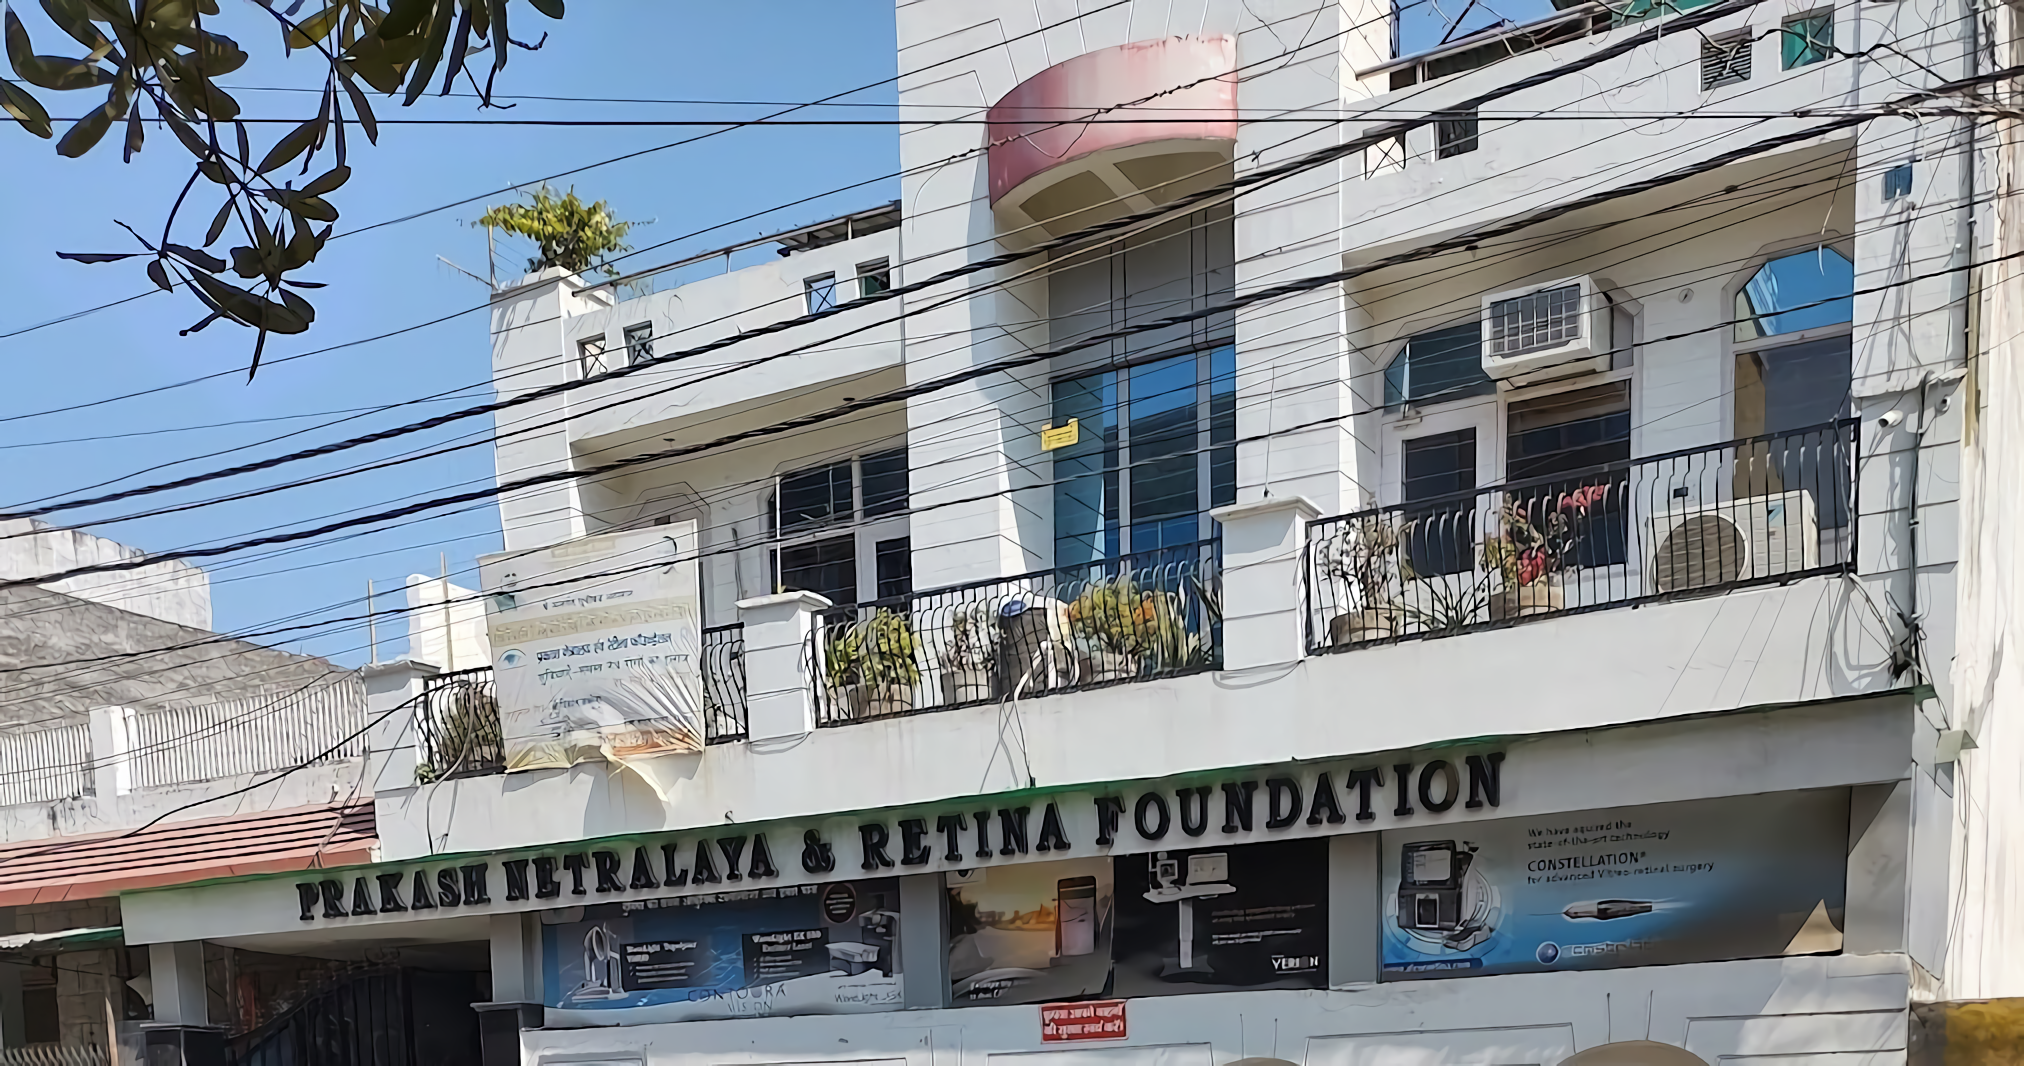 Prakash Netralaya And Retina Foundation